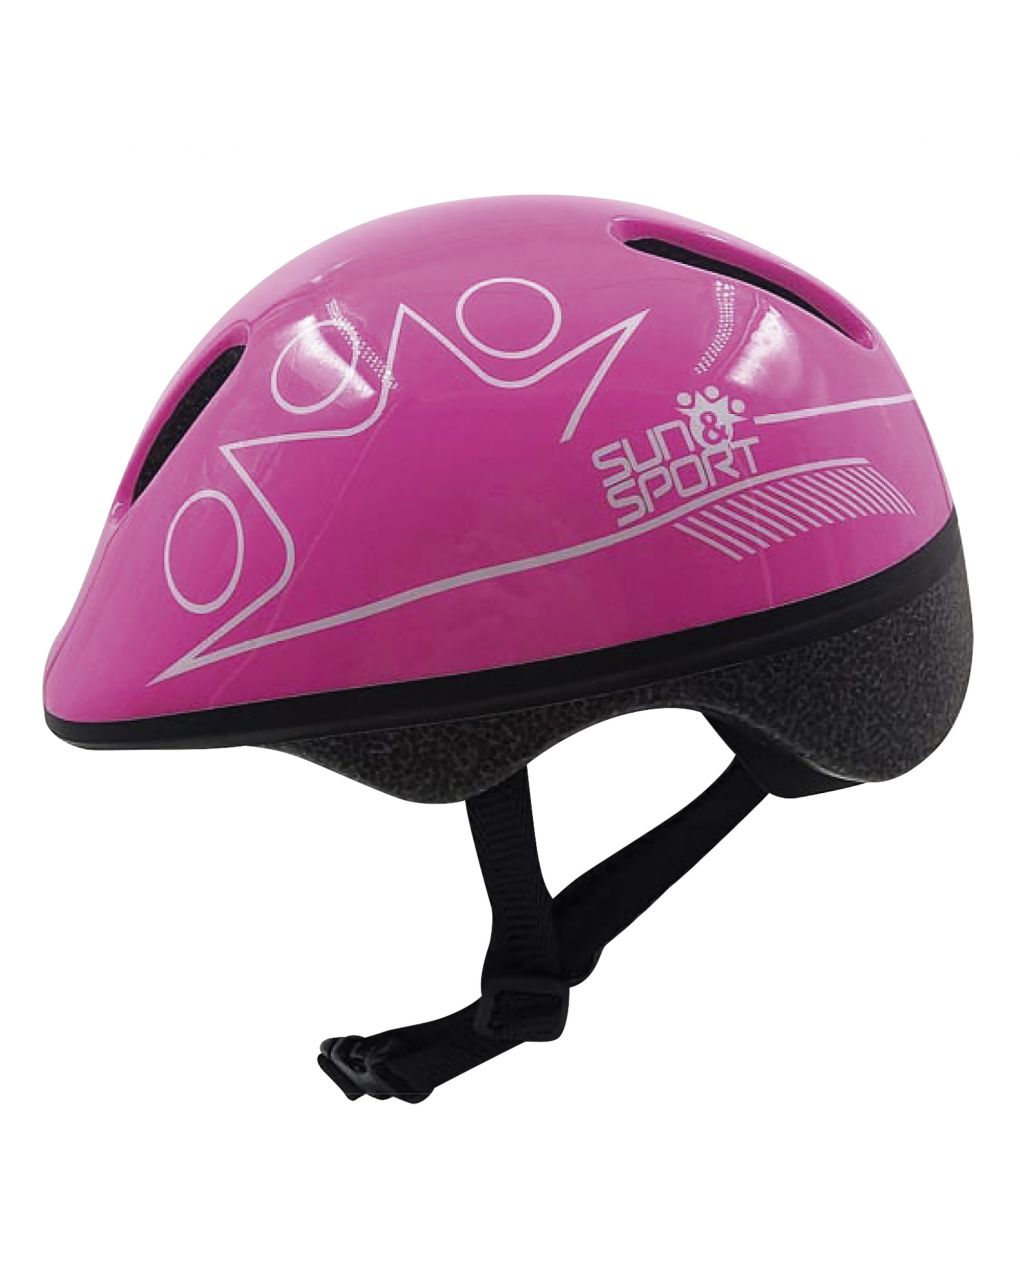 Sol e esporte - capacete feminino - Sun&amp;Sport